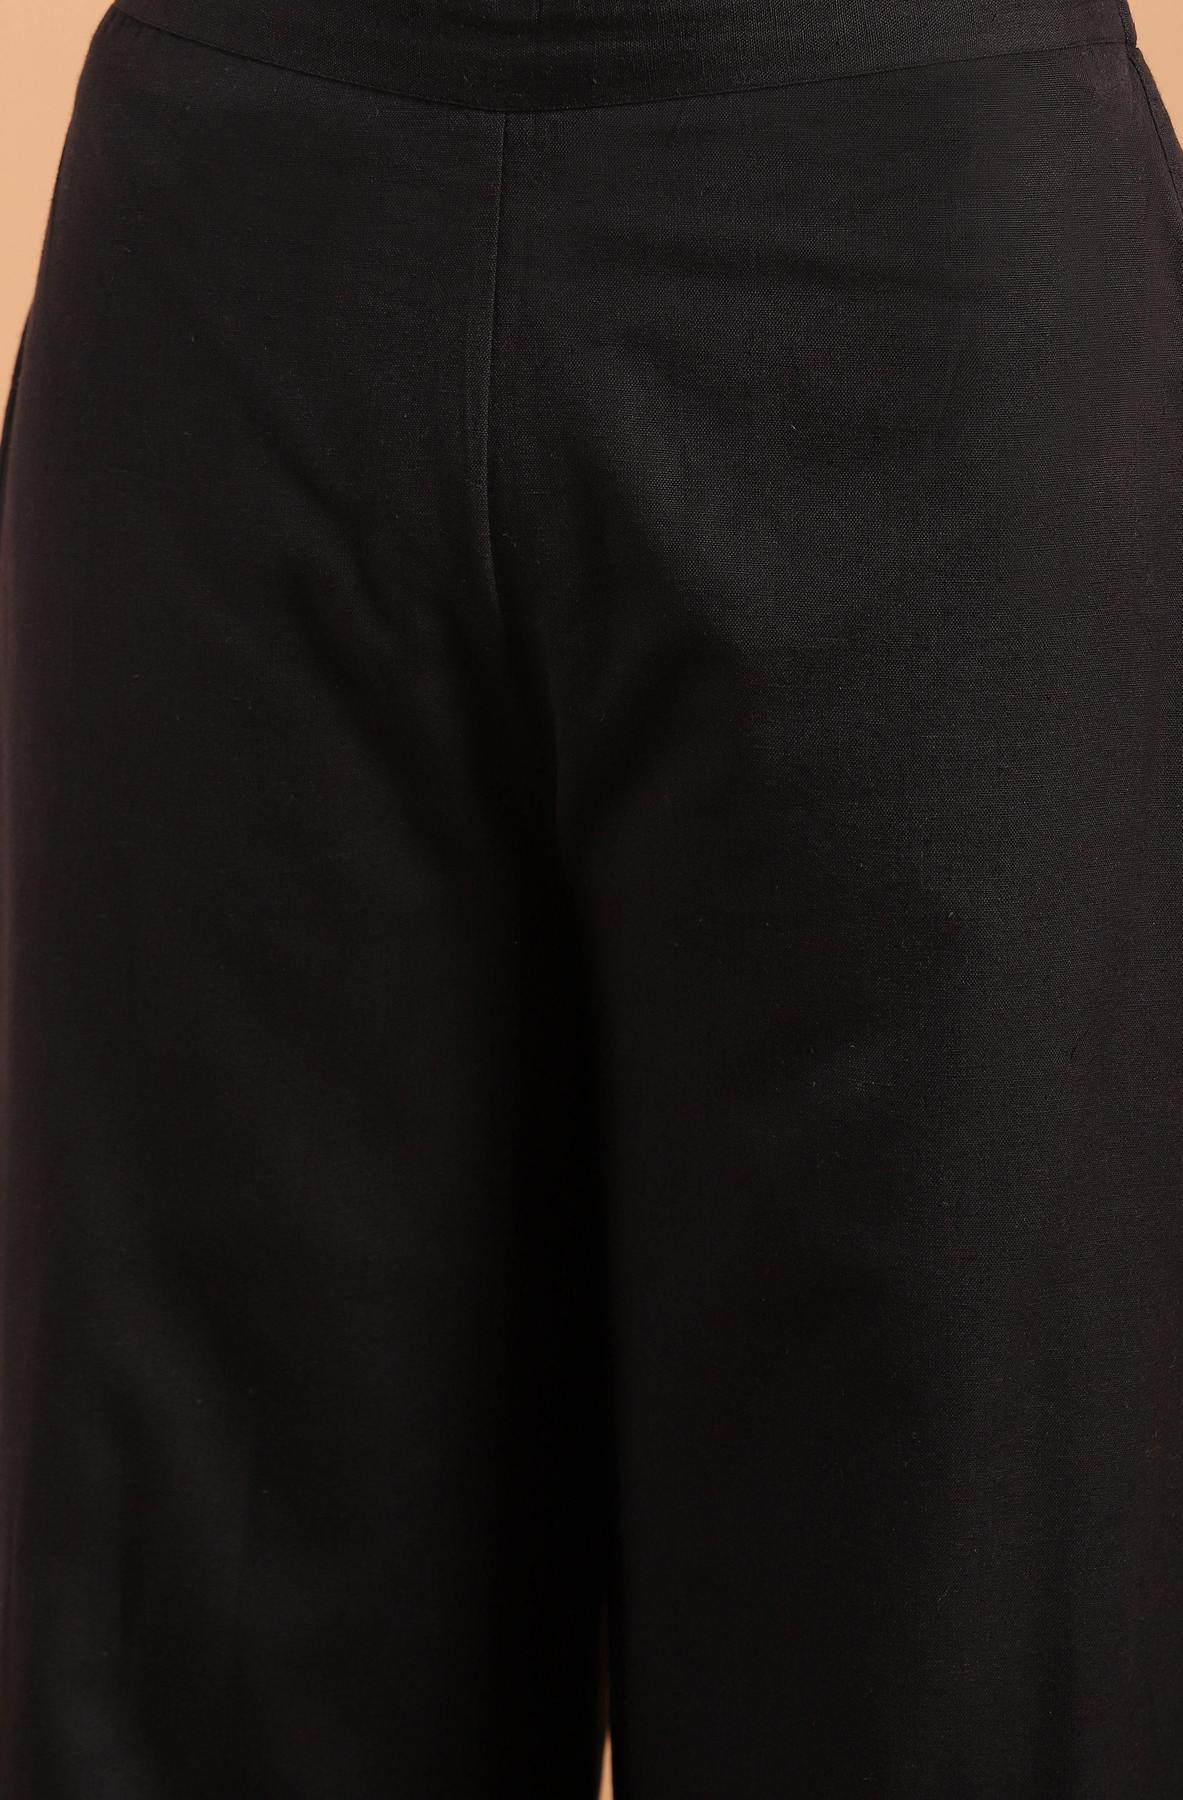 Black & White Cotton Kurta with Pants